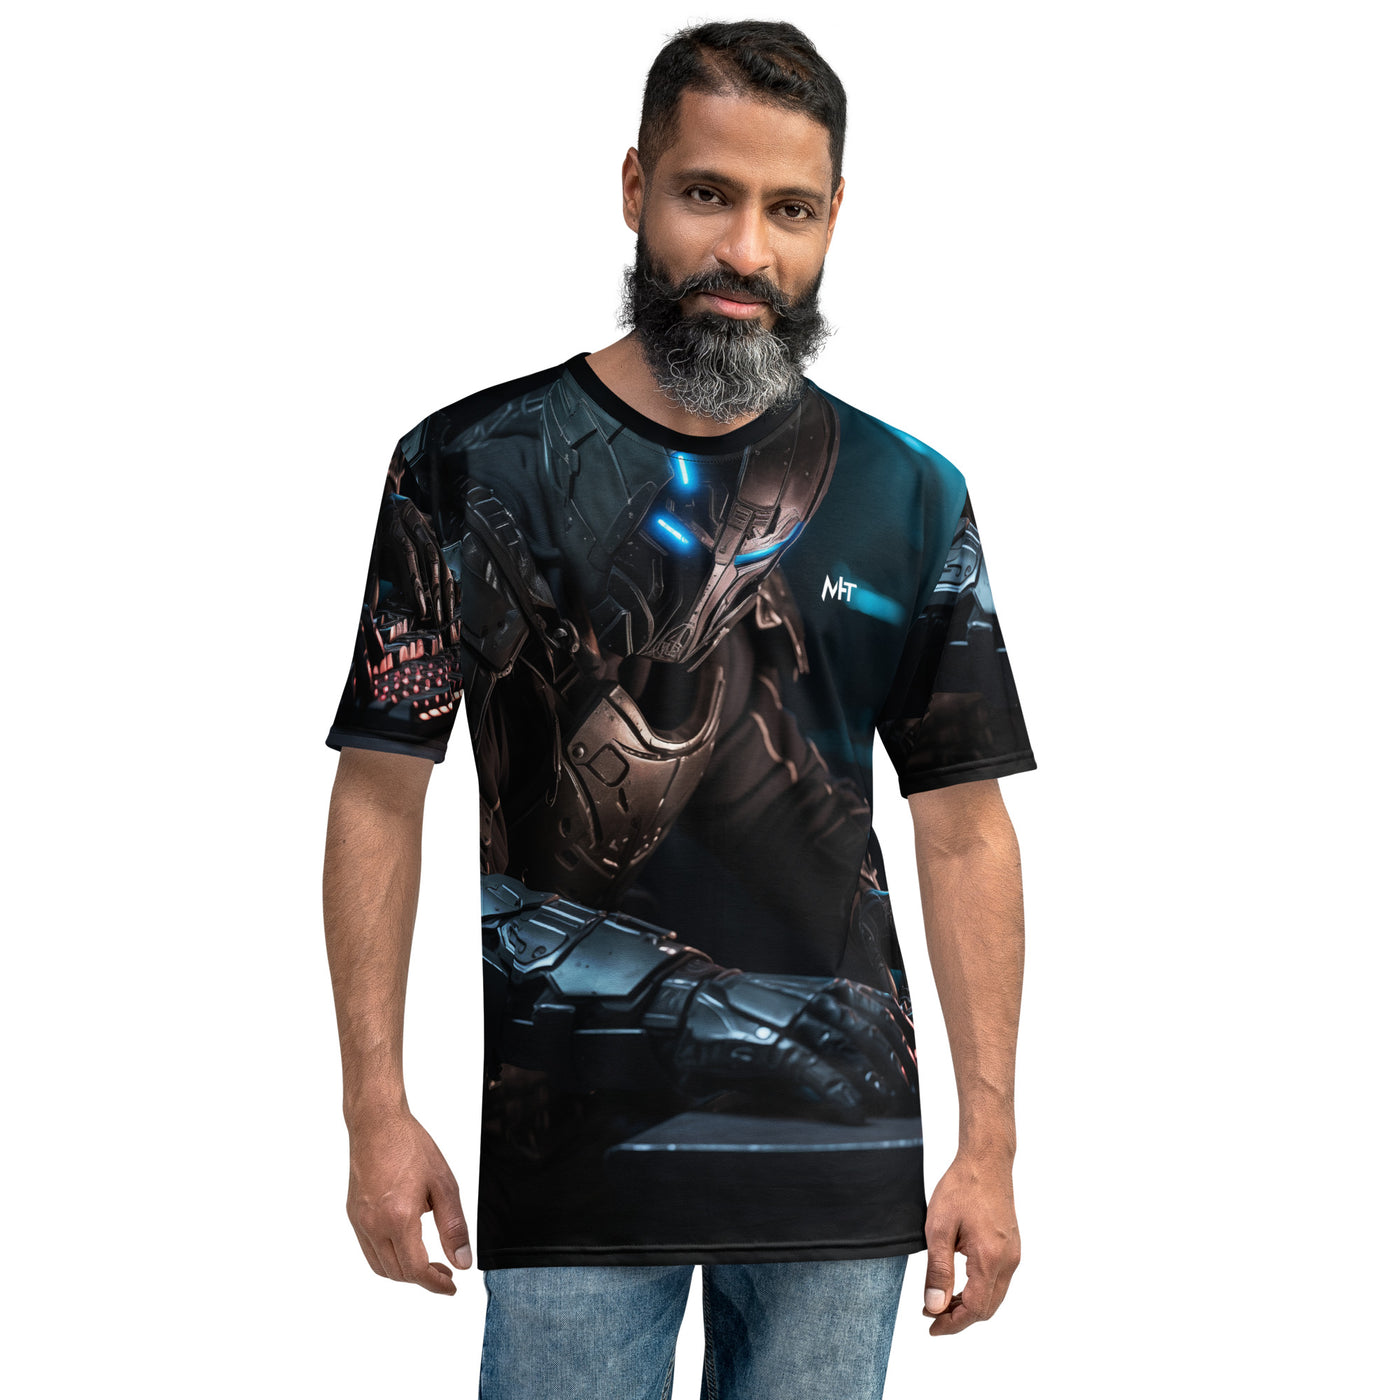 CyberArms Warrior v10 - Men's t-shirt